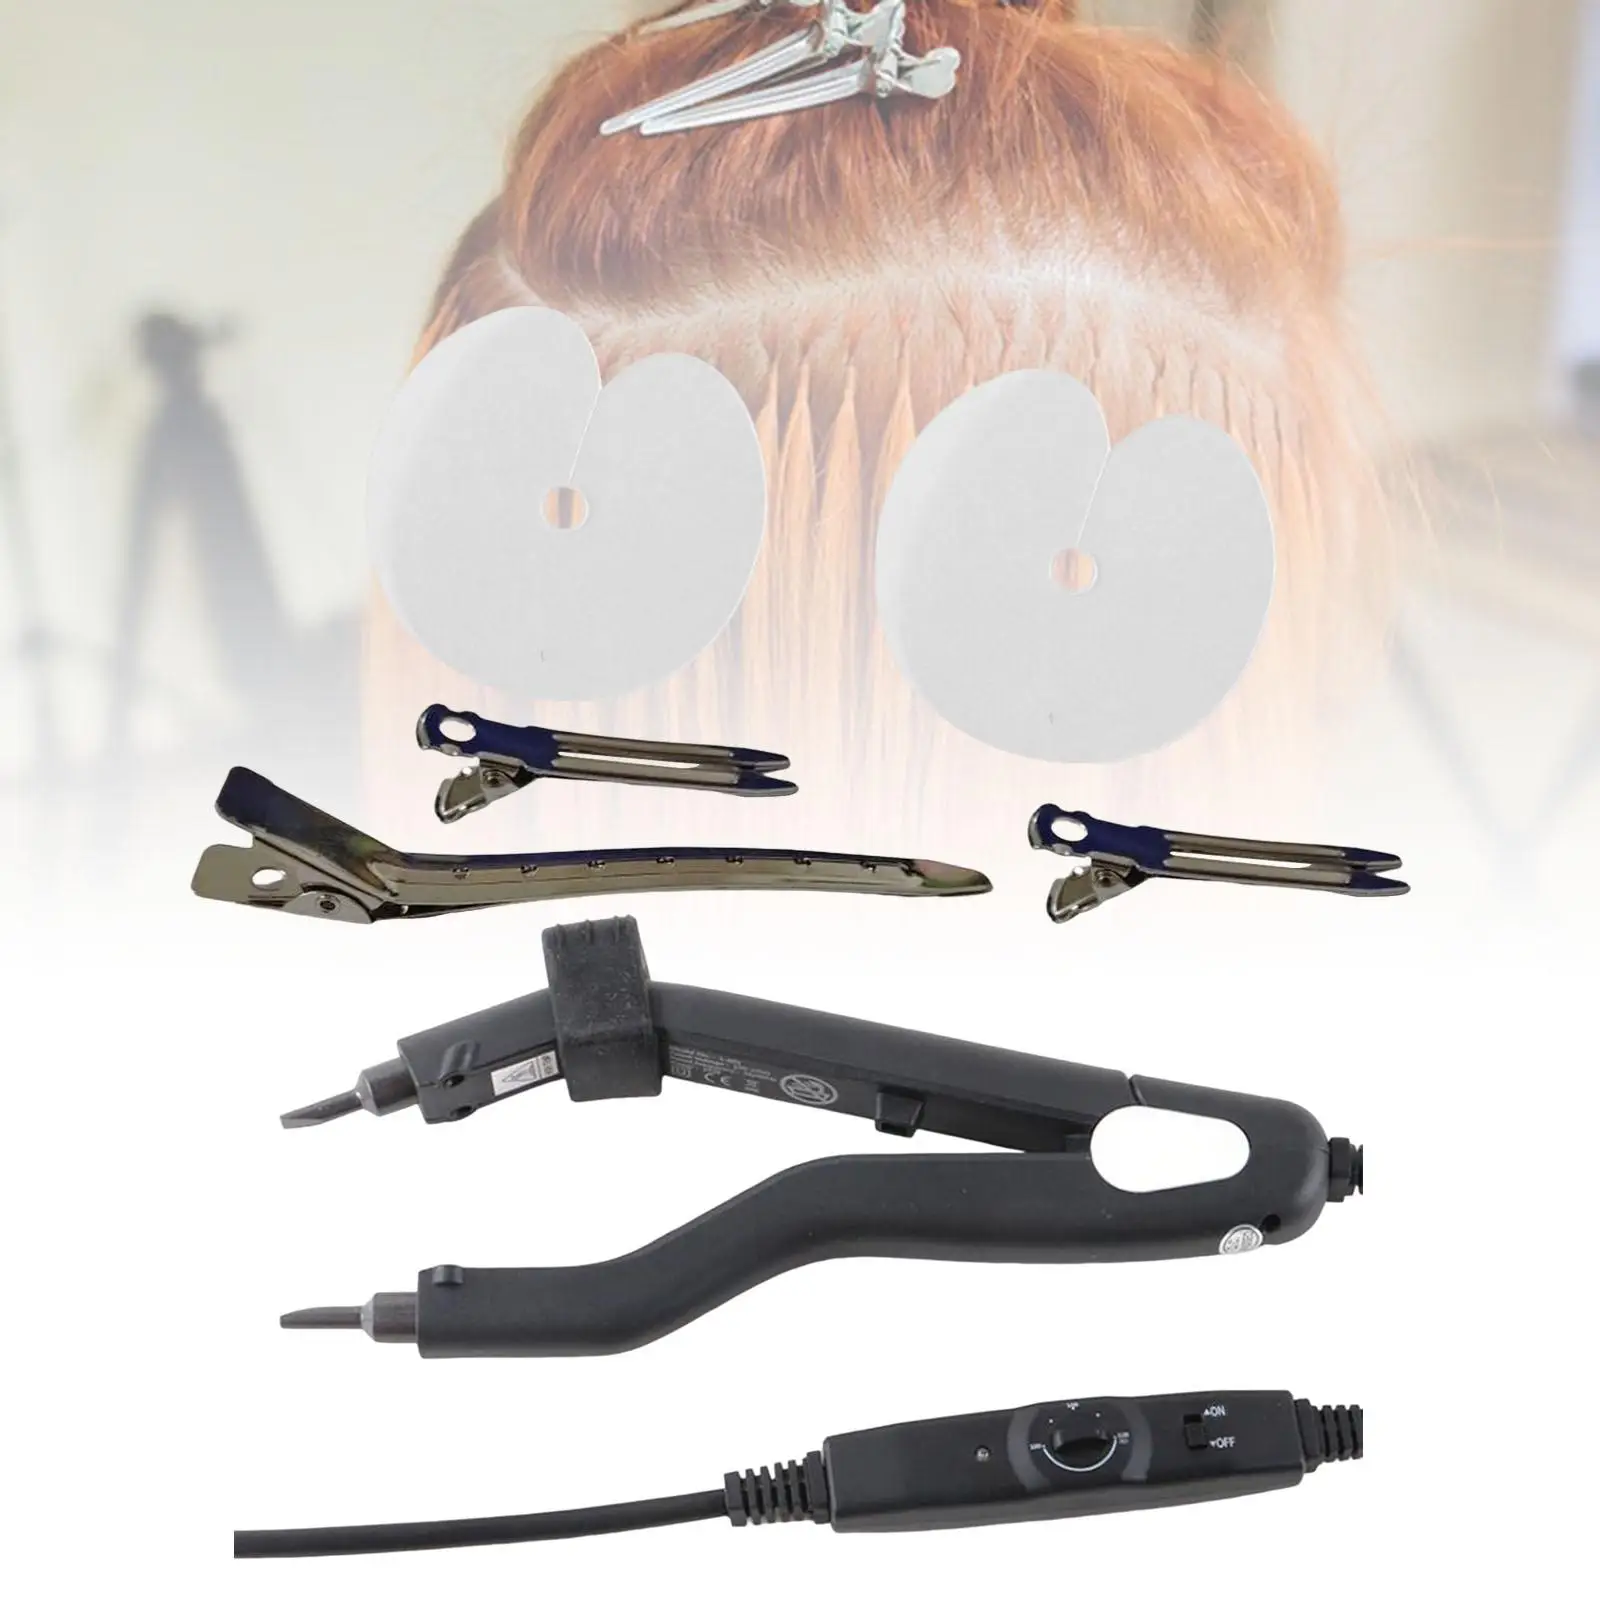 s Tool Heat Connector Melting Machine for Hairdresser Accesories Barbershop Salon Equipment Hair Stylist Girls